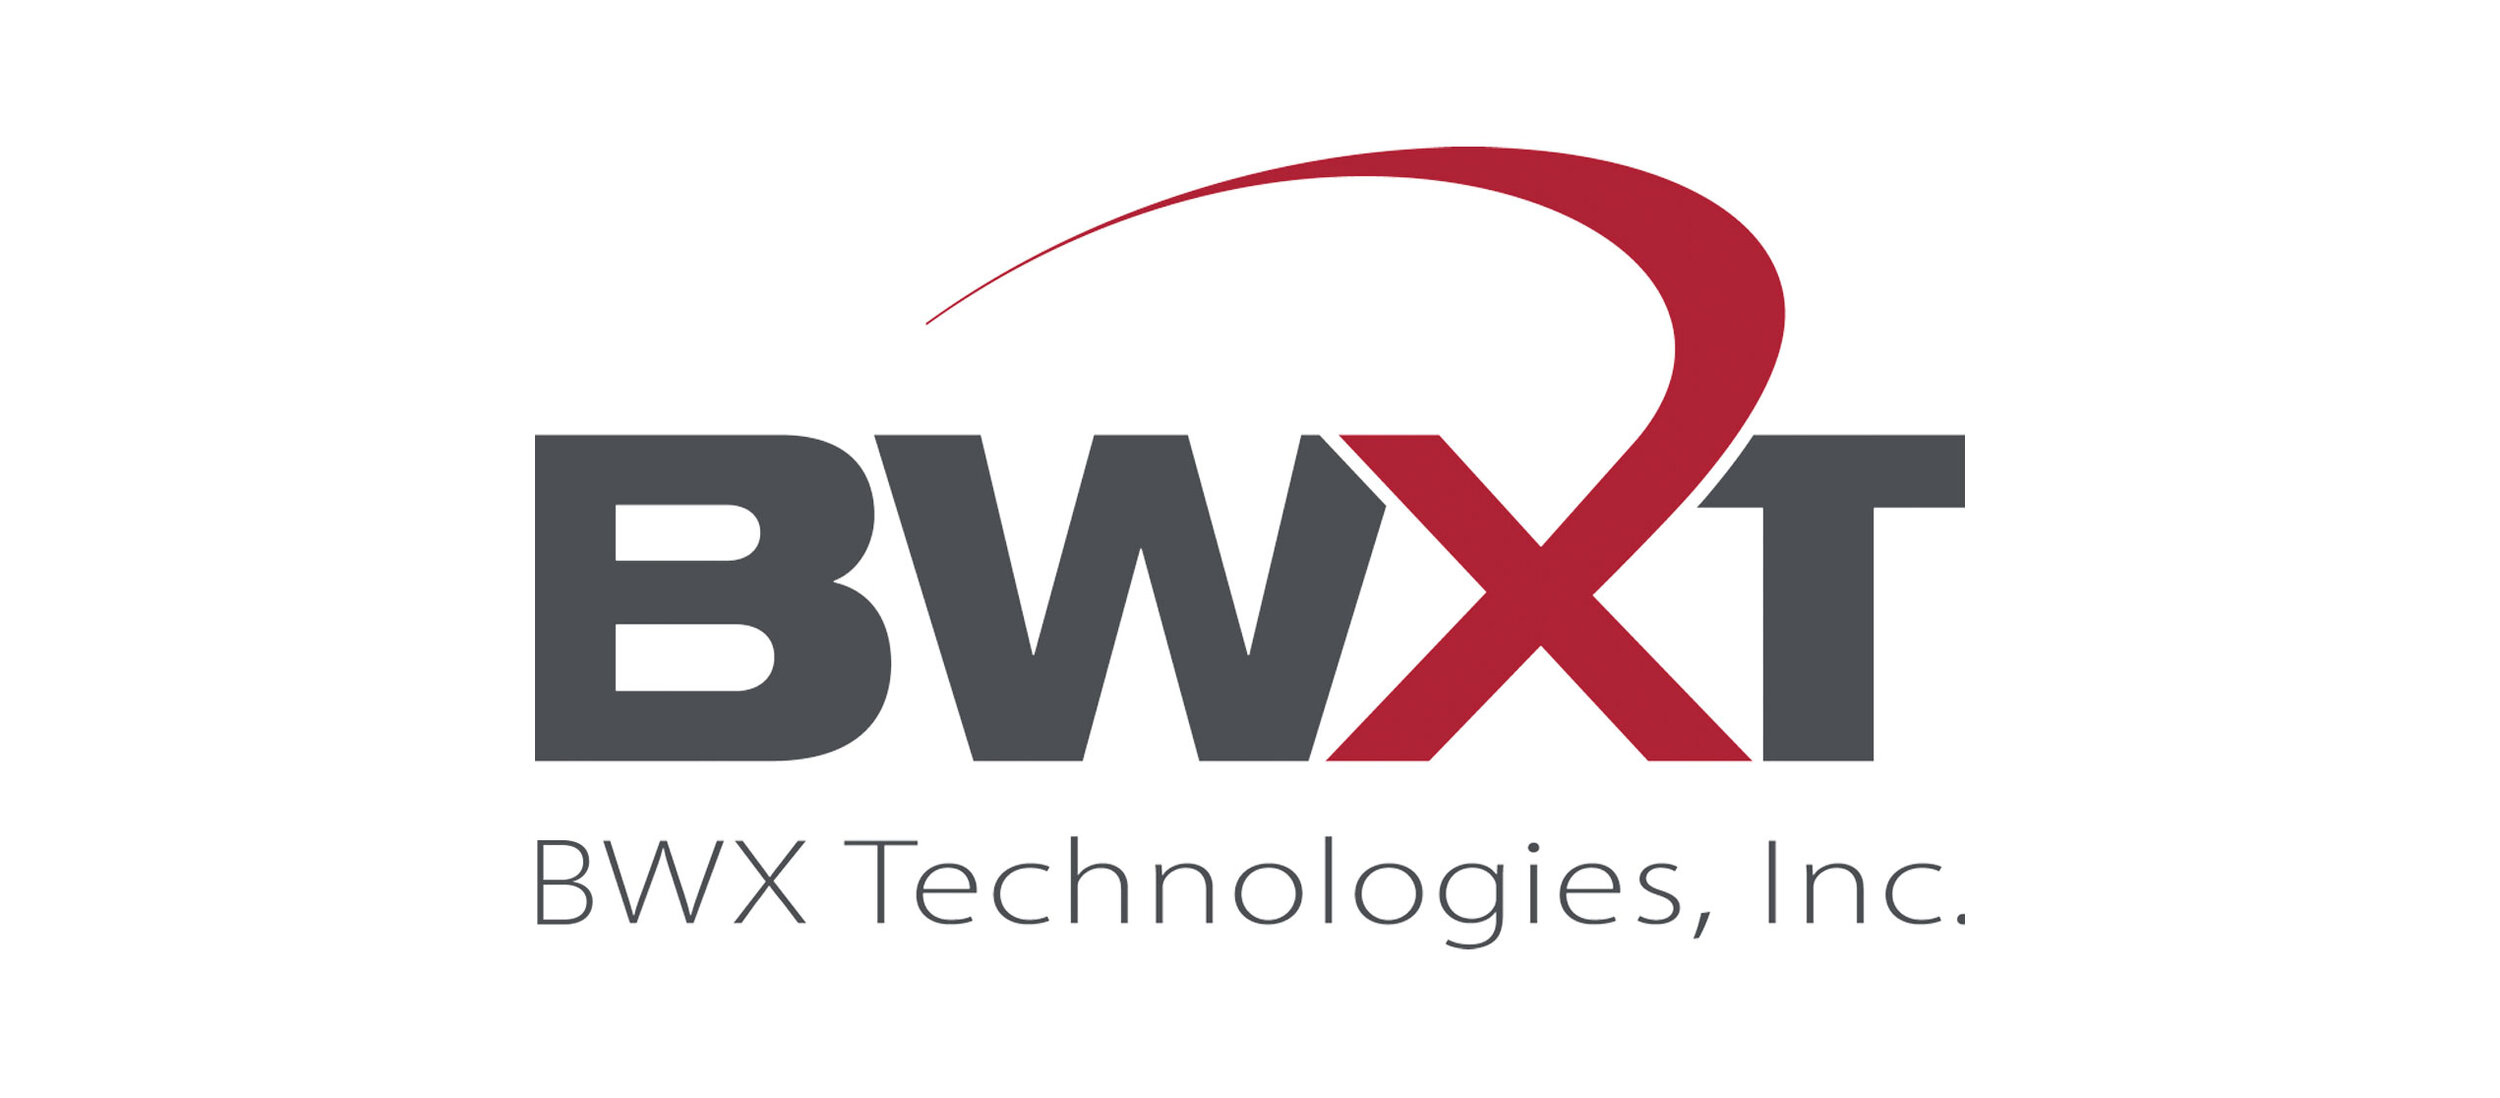 NovaTech-Client_Logos-WF_0004_BWXT.jpg